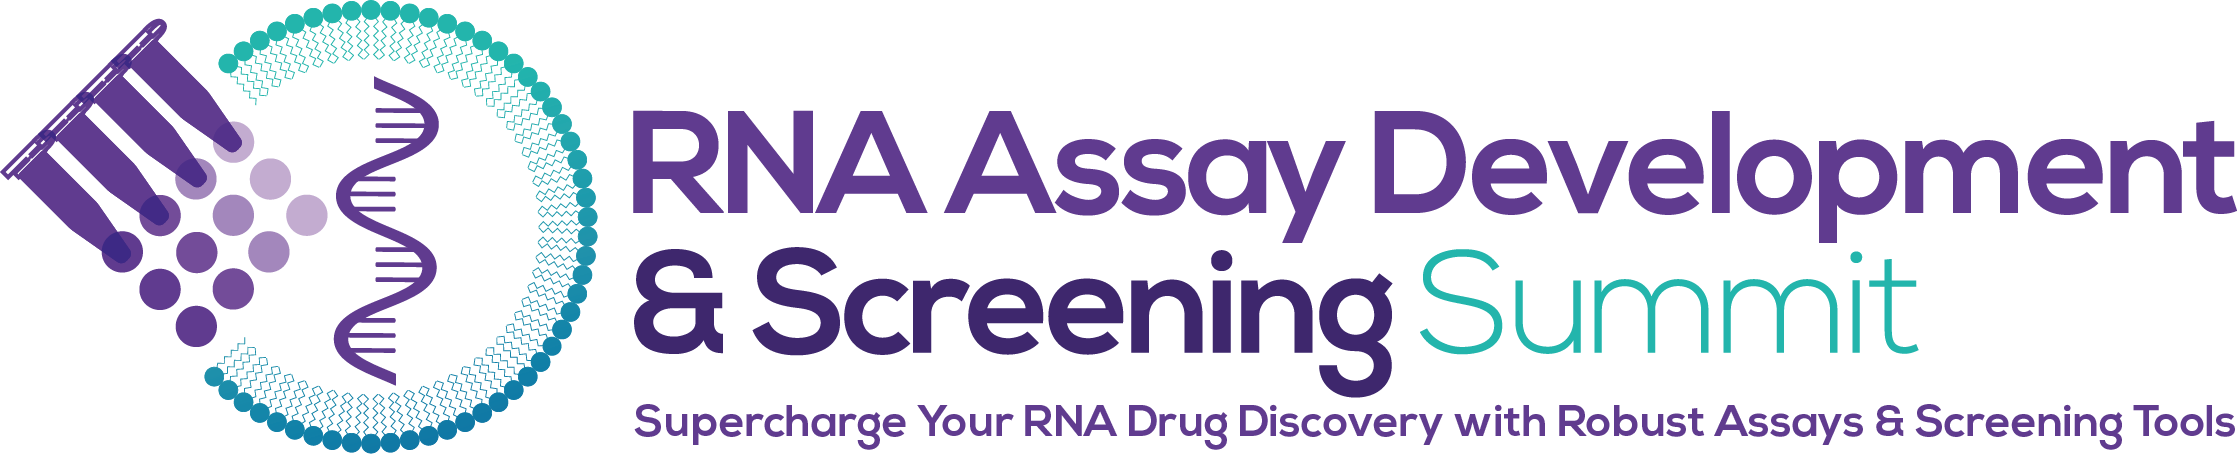 RNA Assay Development & Screening Summit logo